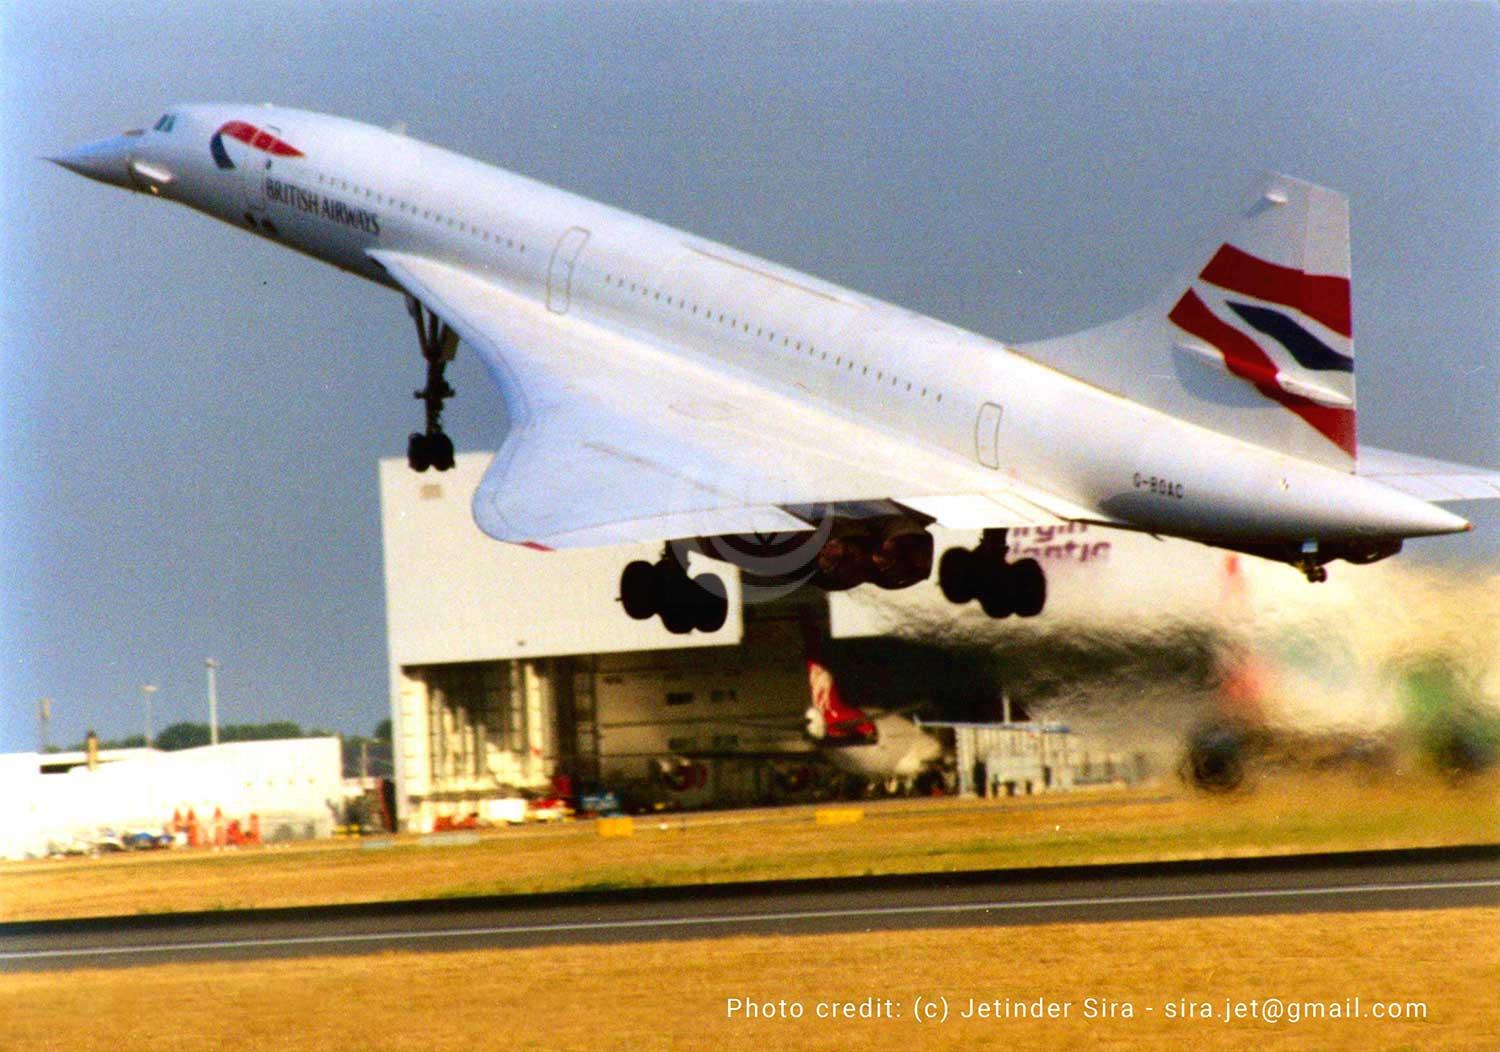 Concorde G-BOAC lifting off